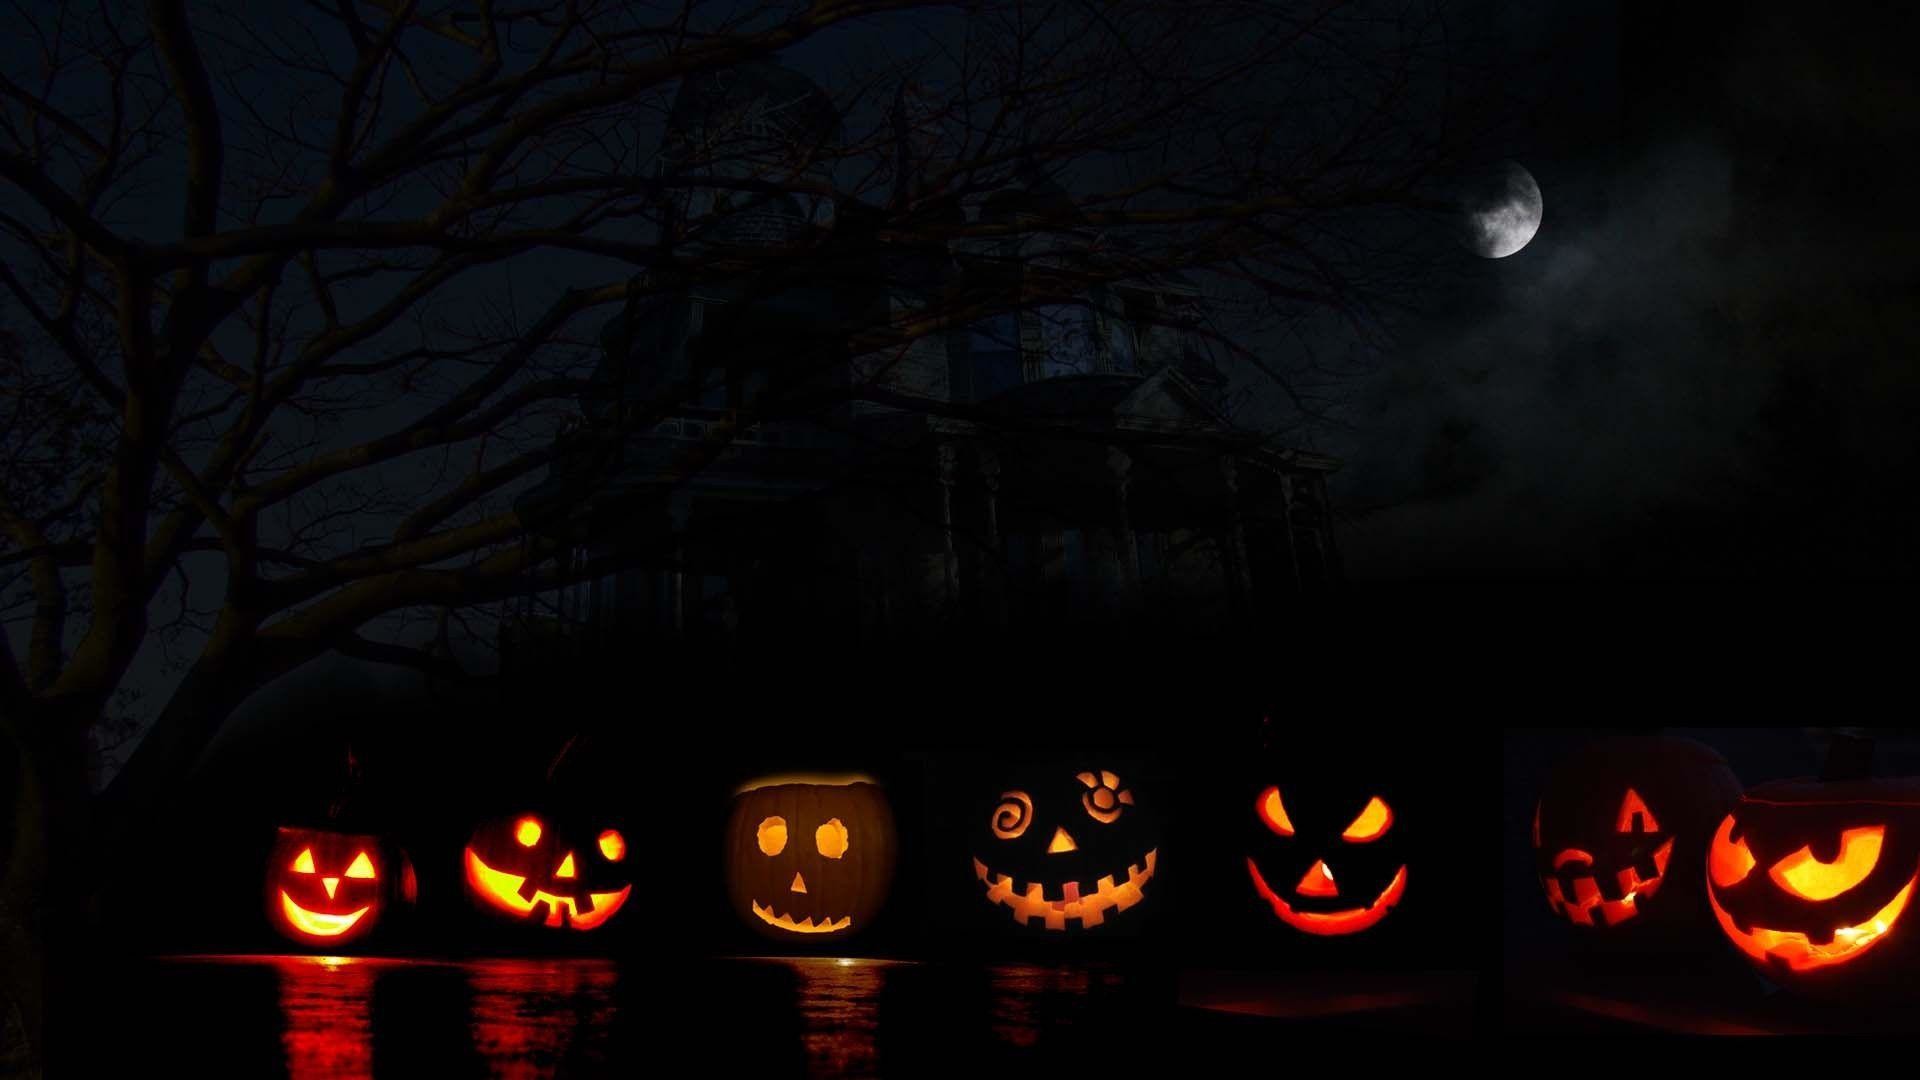 HD Michael Myers Halloween Wallpaper images